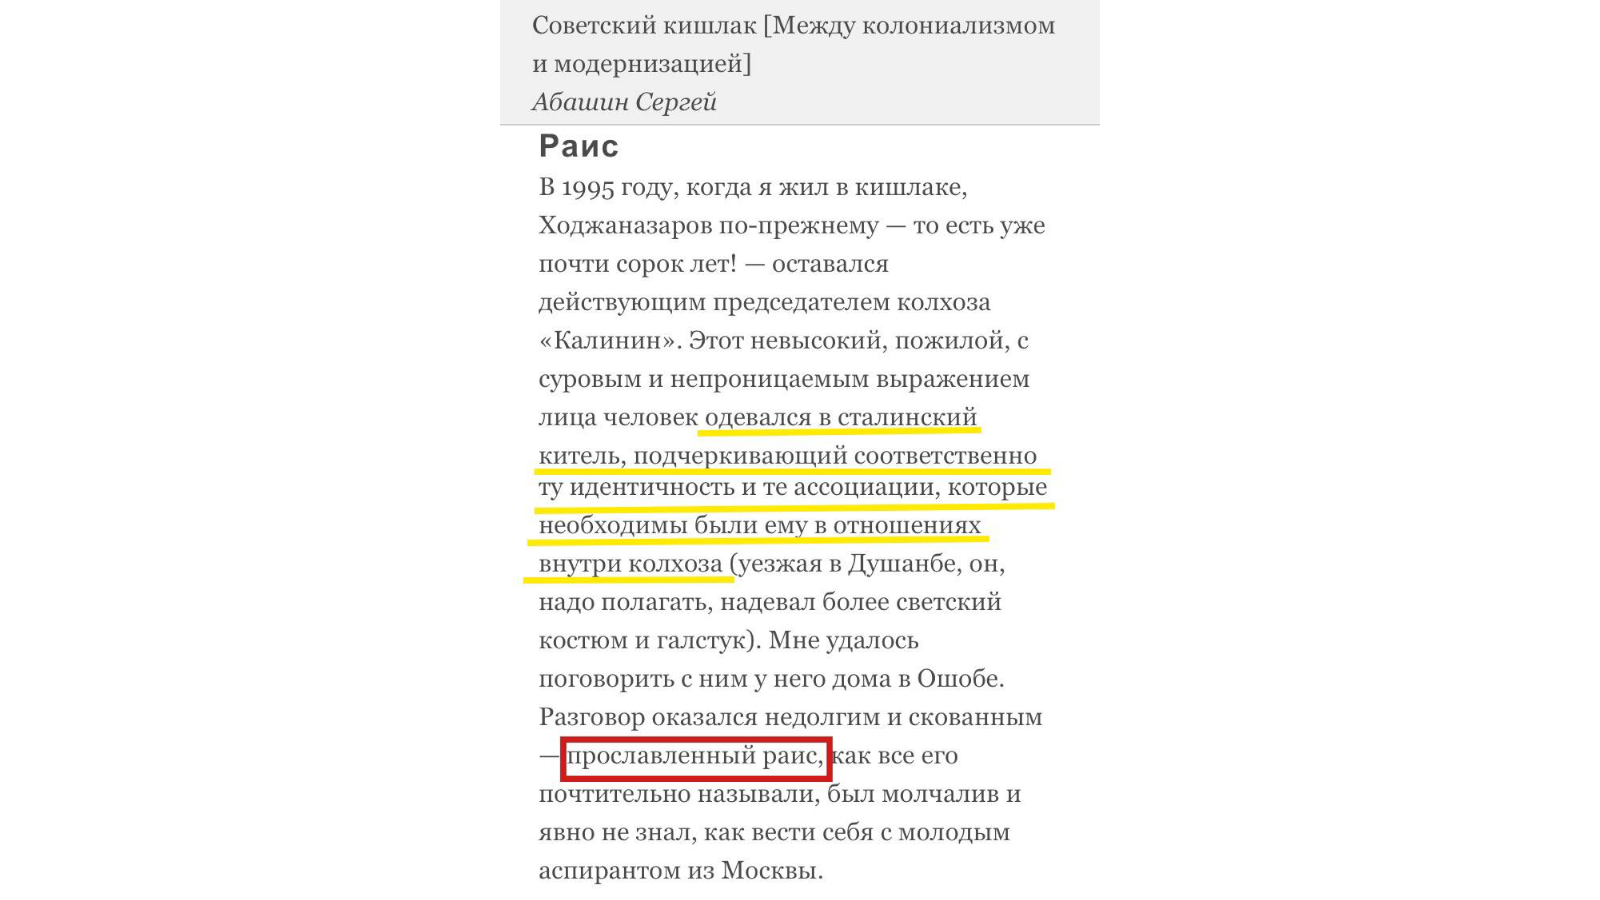 “Law on rais”: a collective farm called Tatarstan or a country called Tatarstan?